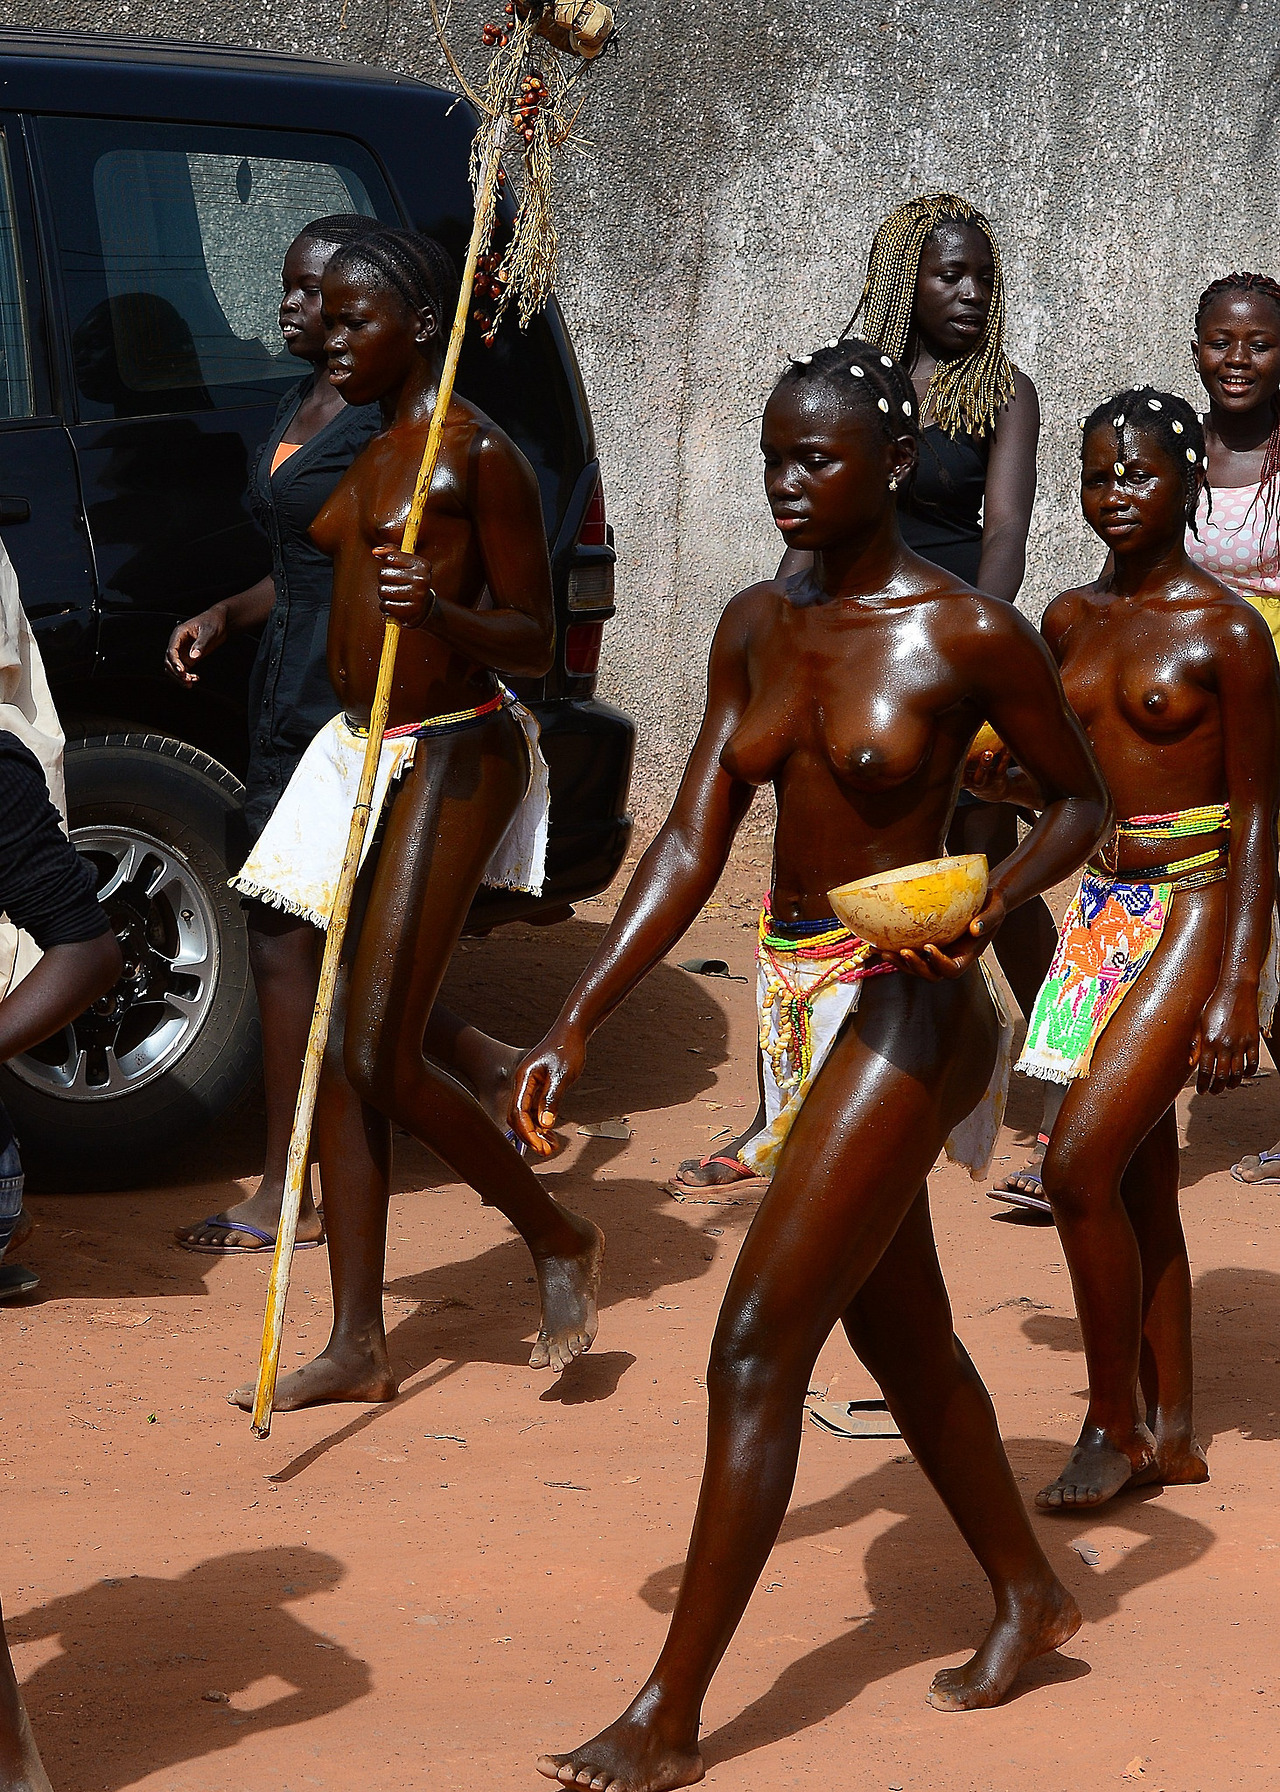 Guinea Bissau carnival, by Transafrica TogoCarnival is the main festivity in Guinea